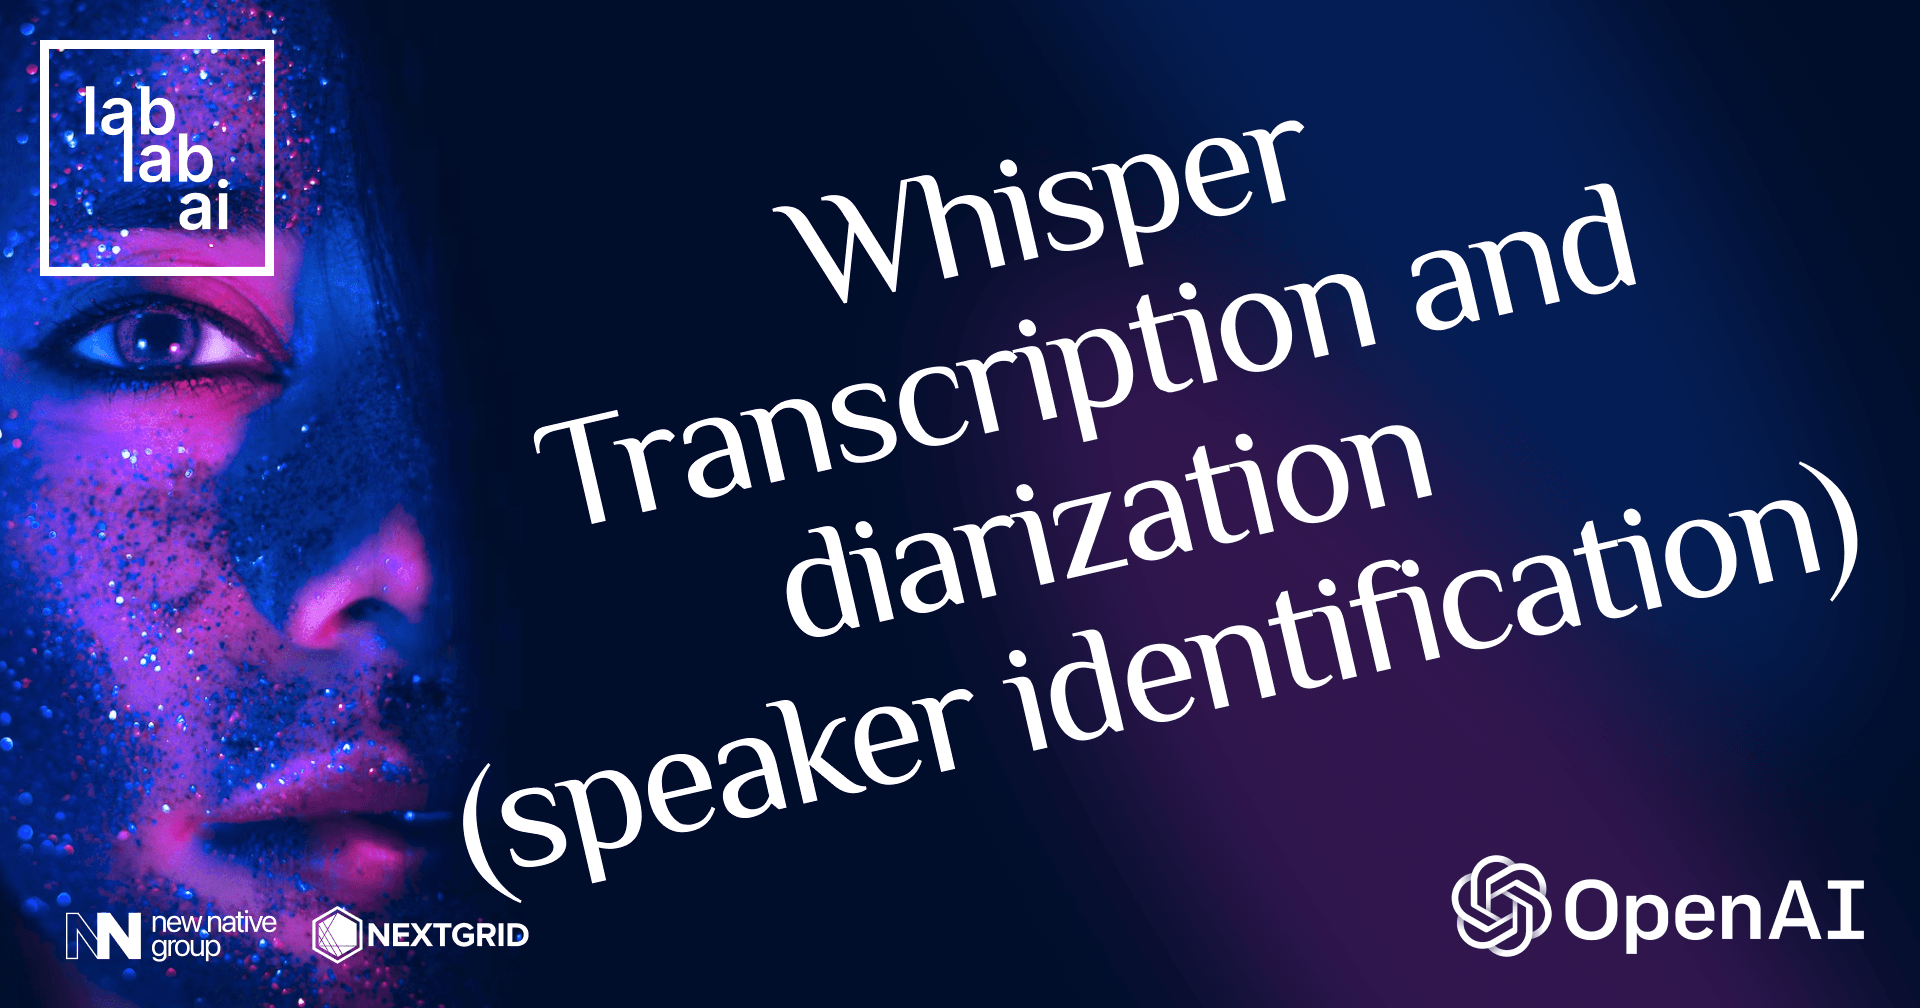 OpenAI Whisper tutorial: Whisper - Transcription and diarization (speaker identification) tutorial